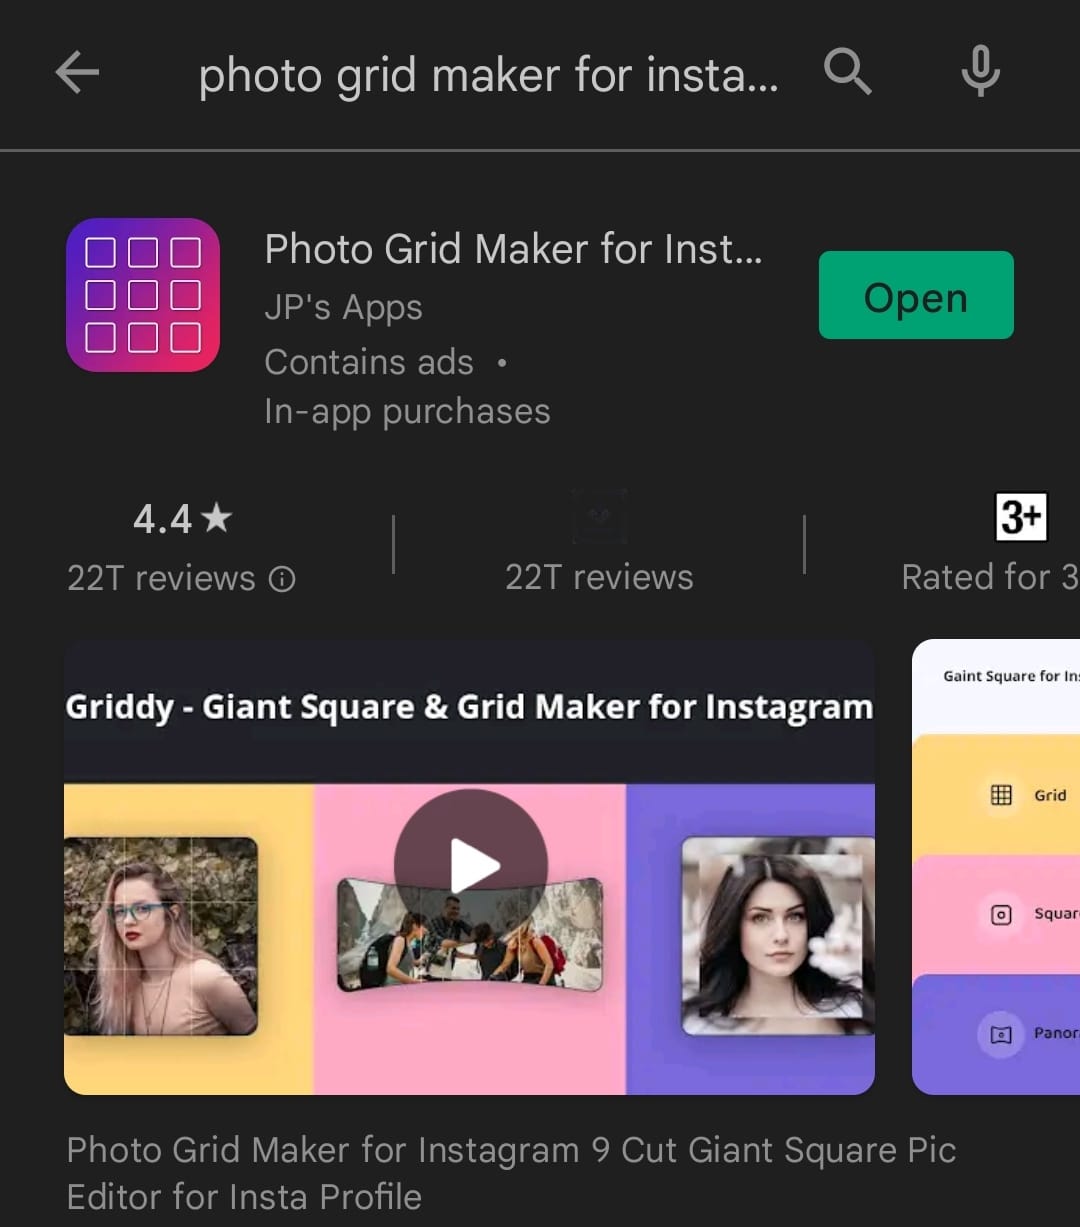 Play Store ကိုဖွင့်ပါ။ Instagram | အတွက် Photo Grid Maker အမည်ရှိ အက်ပ်တစ်ခုကို ရှာဖွေပြီး ထည့်သွင်းပါ။ Instagram မှာ 2016 Best Nine ကို ဘယ်လိုရယူမလဲ။